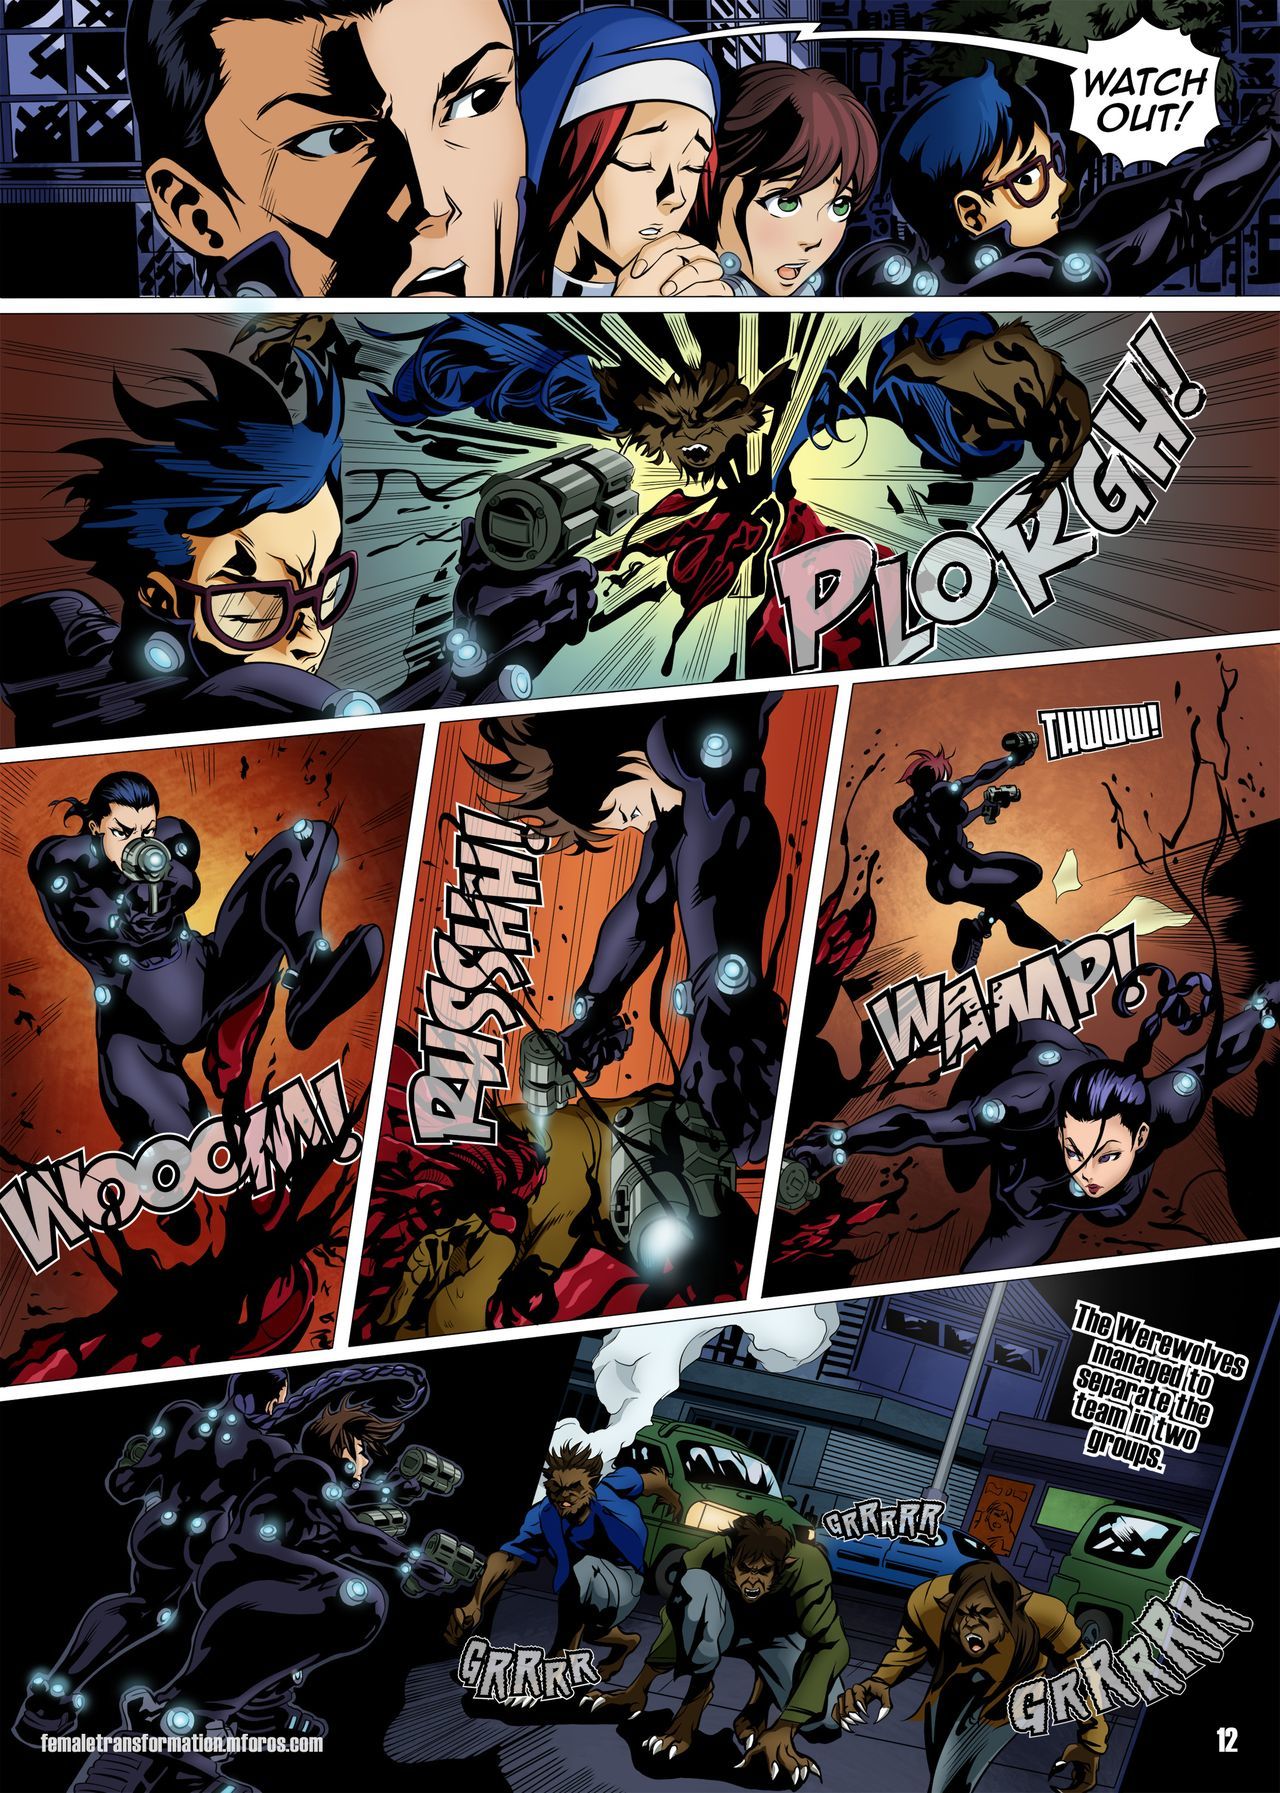 Werewolf Mission 02 by Raphadeoli, Helios page 3